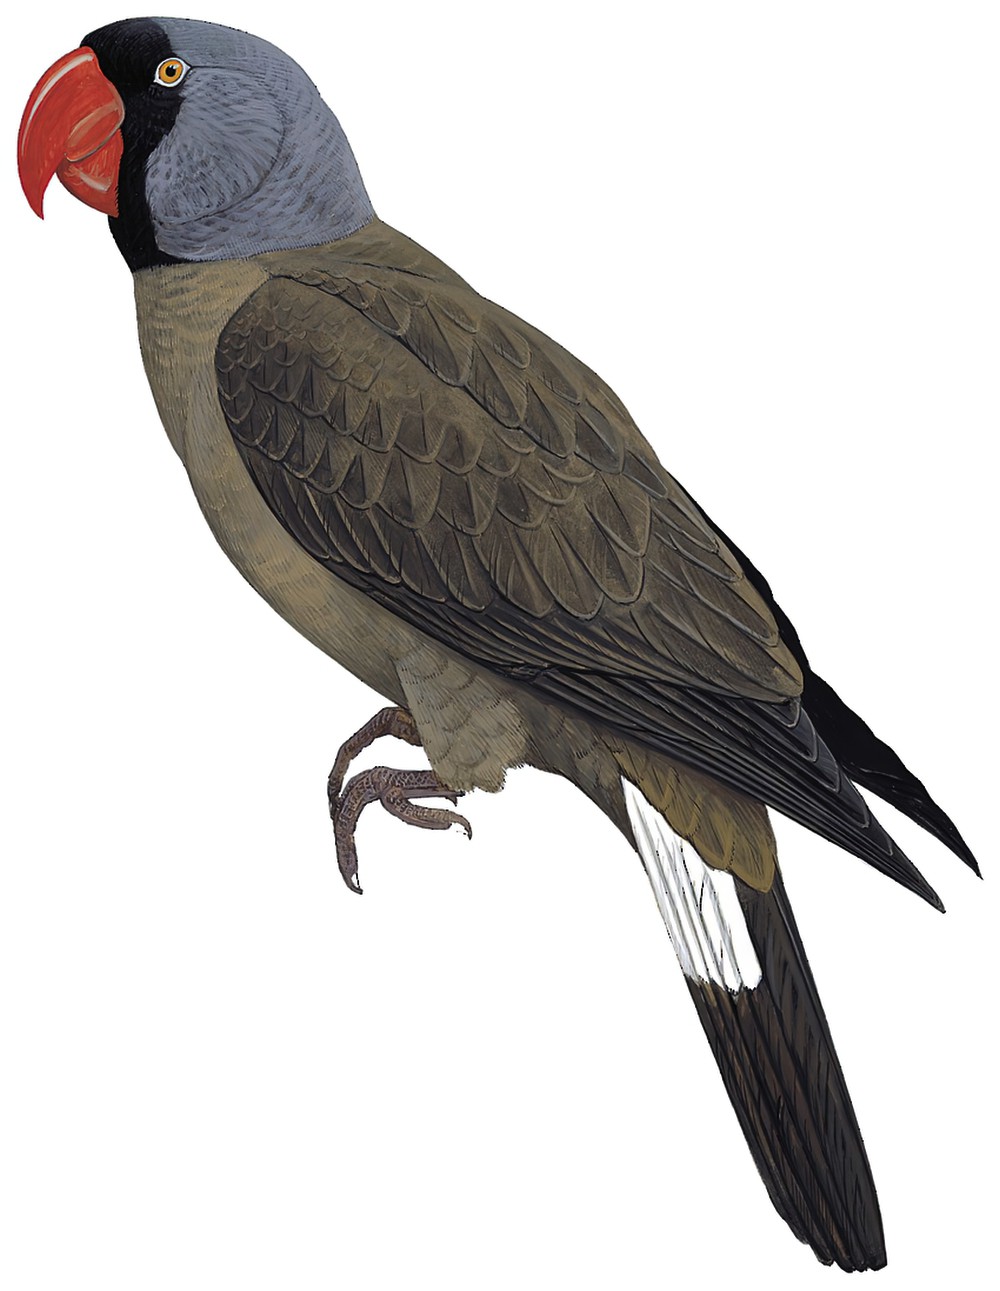 Mascarene Parrot / Mascarinus mascarin